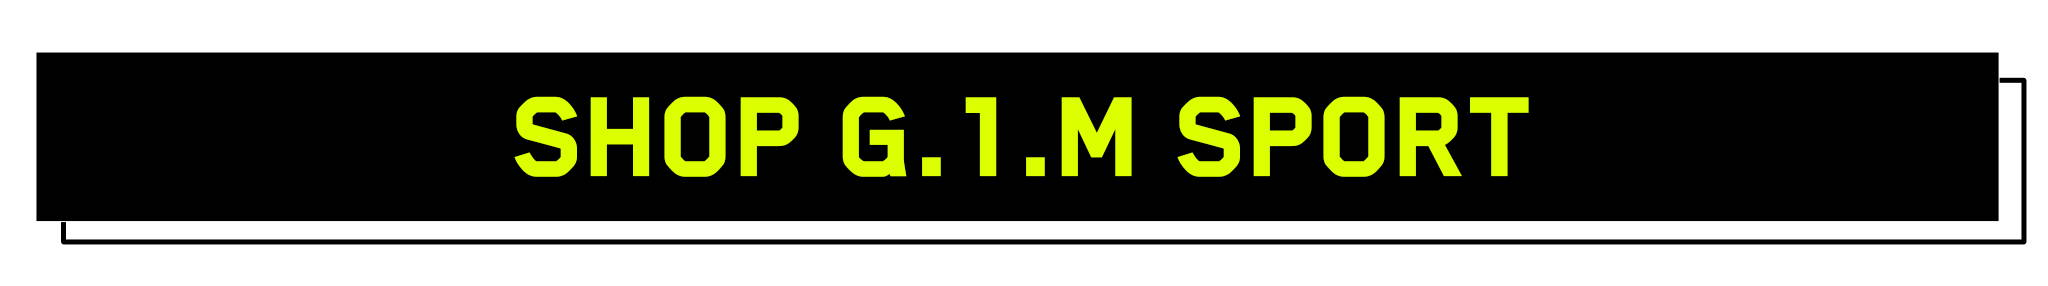 Shop G.1.M Sport product link.